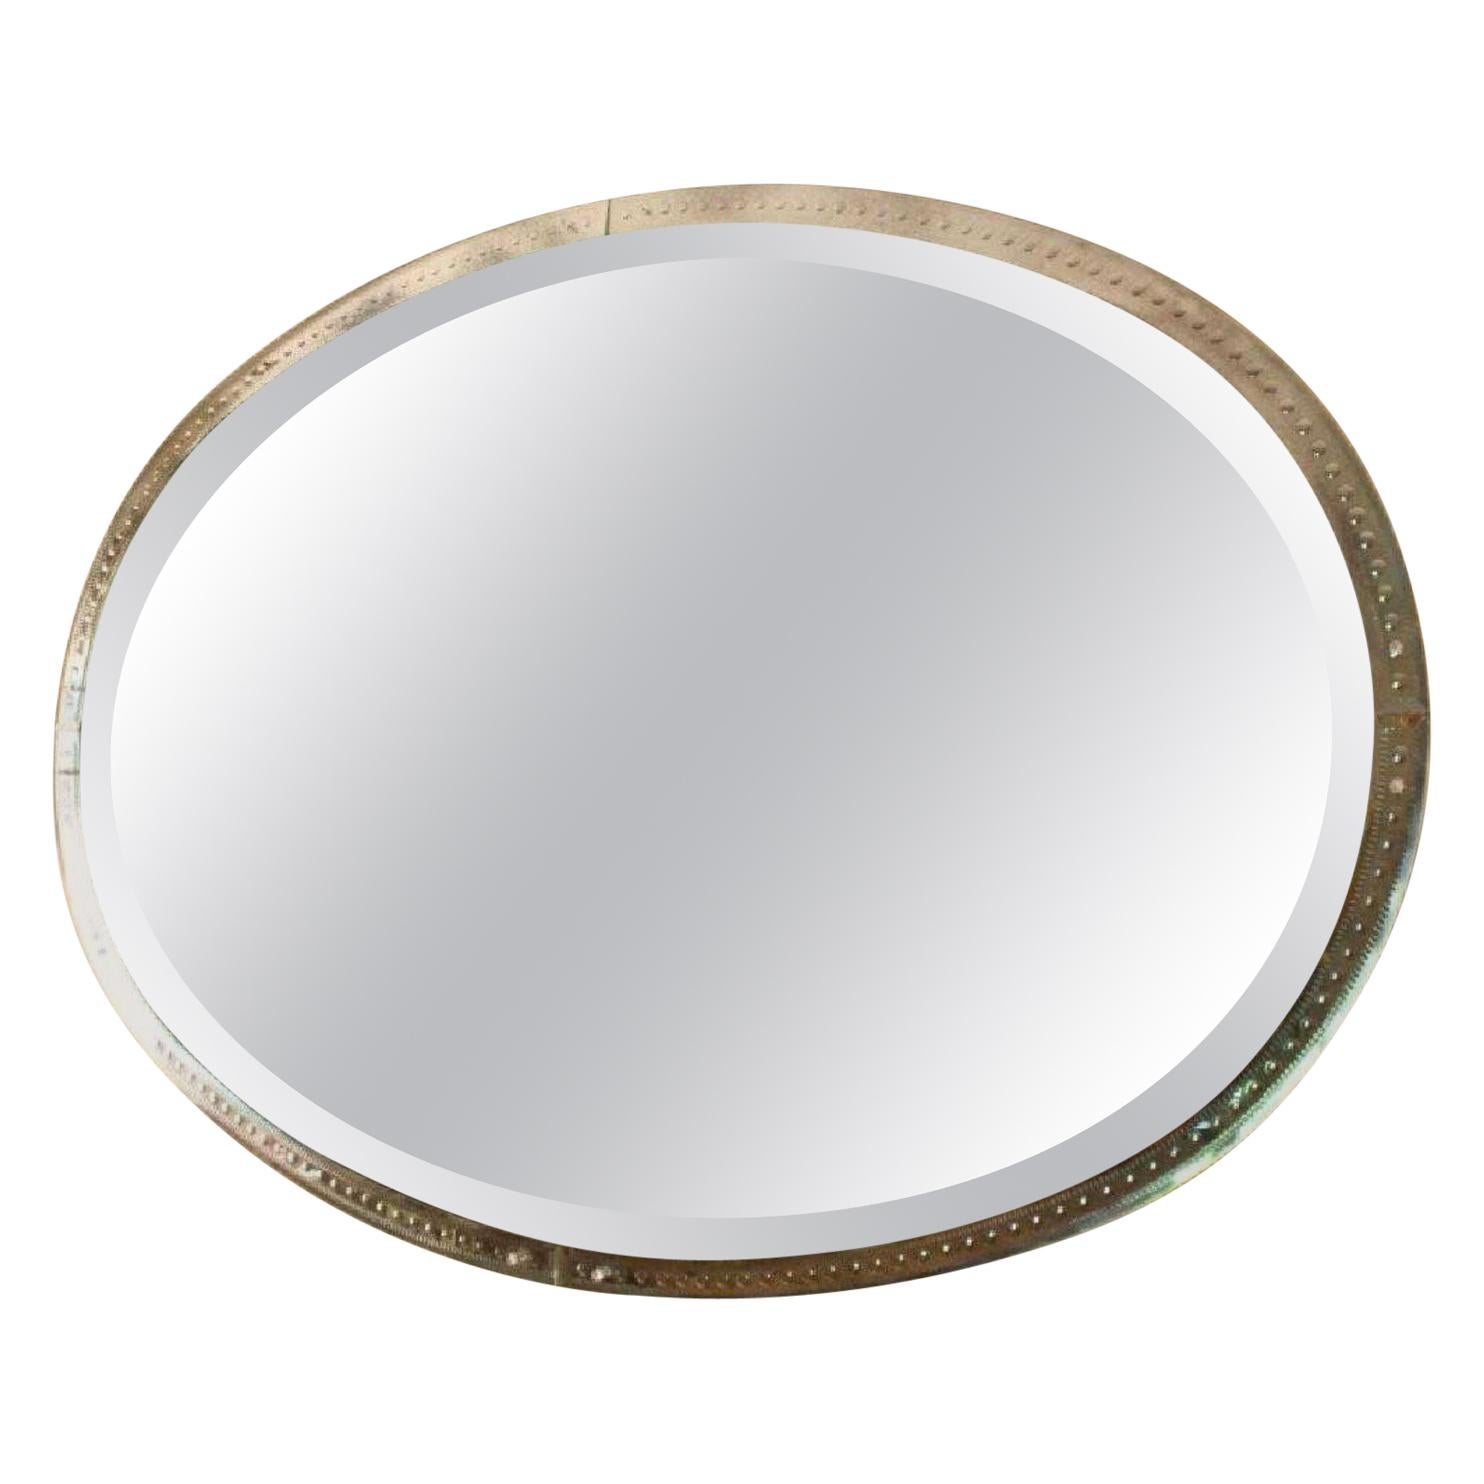 Wonderful Mid-Century Modern Lorin Marsh Large Oval Dots Beveled Venetian Mirror